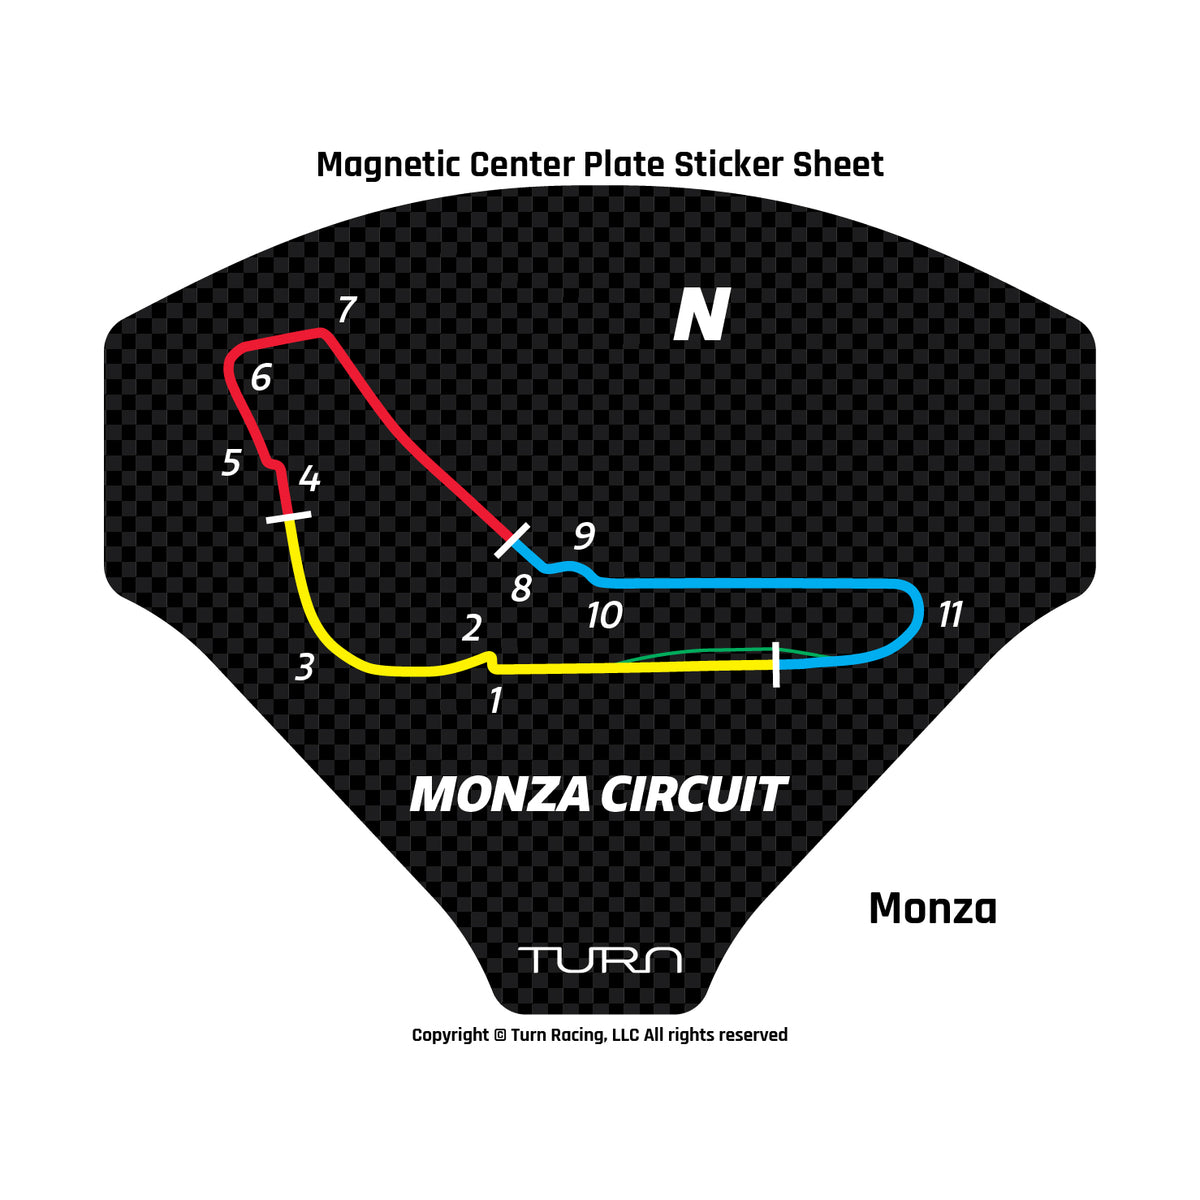 Turn Racing MCP Sticker Sheets